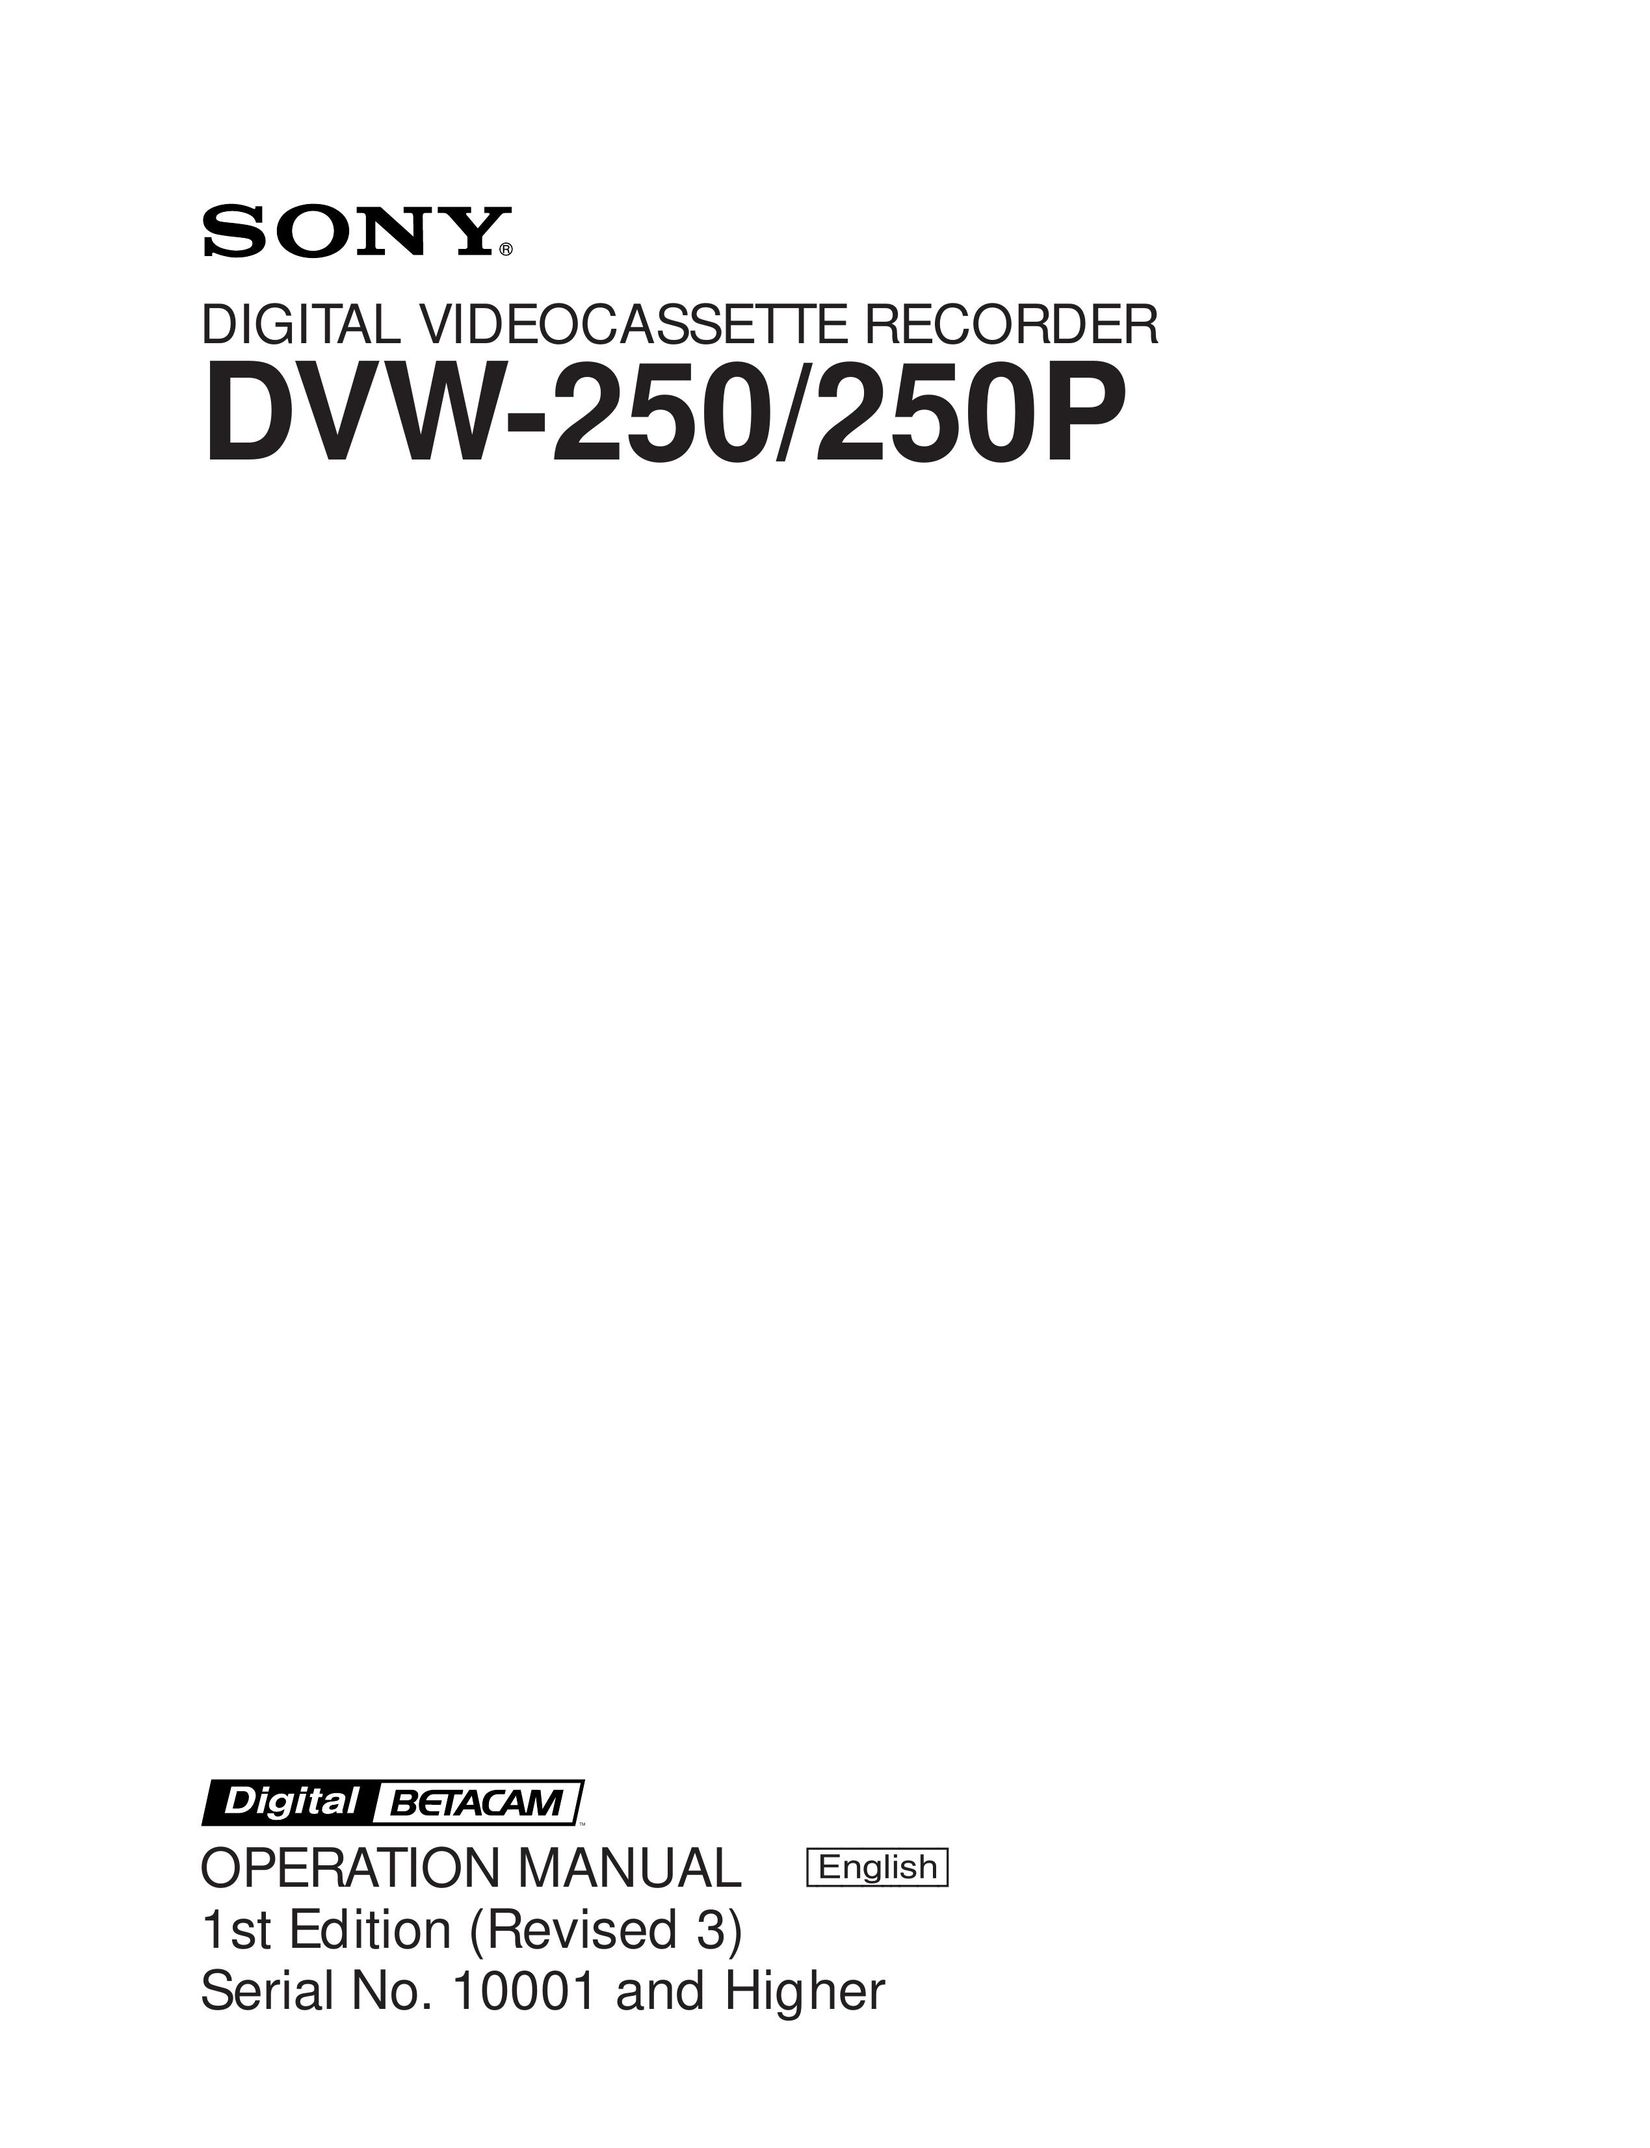 Sony DVW-250 VCR User Manual